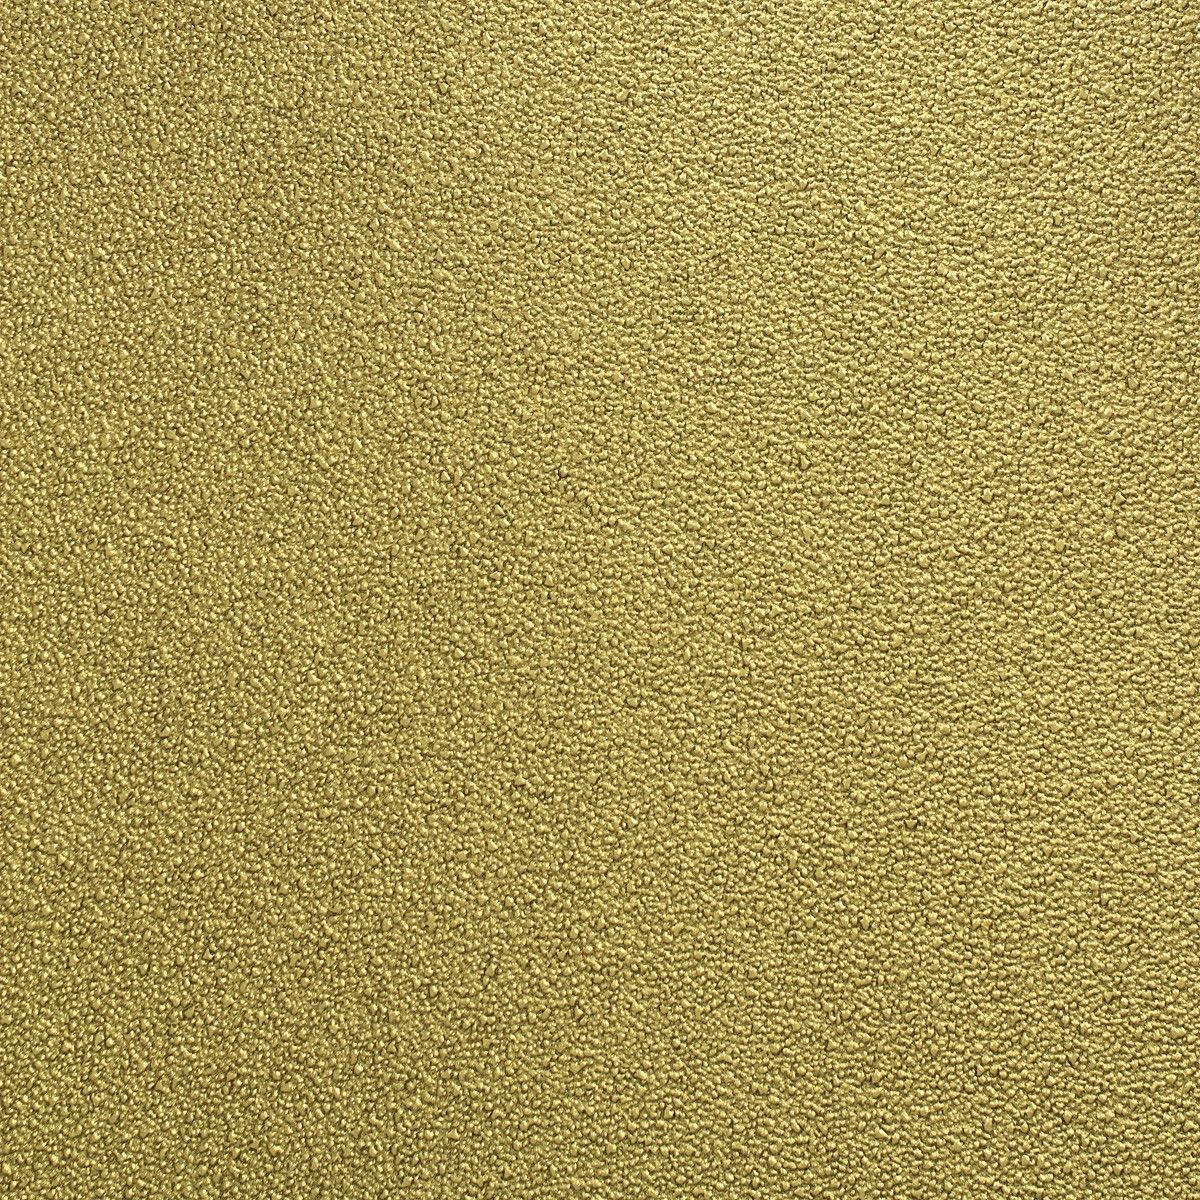 Slightly Bumpy Plain Gold Background Wallpaper